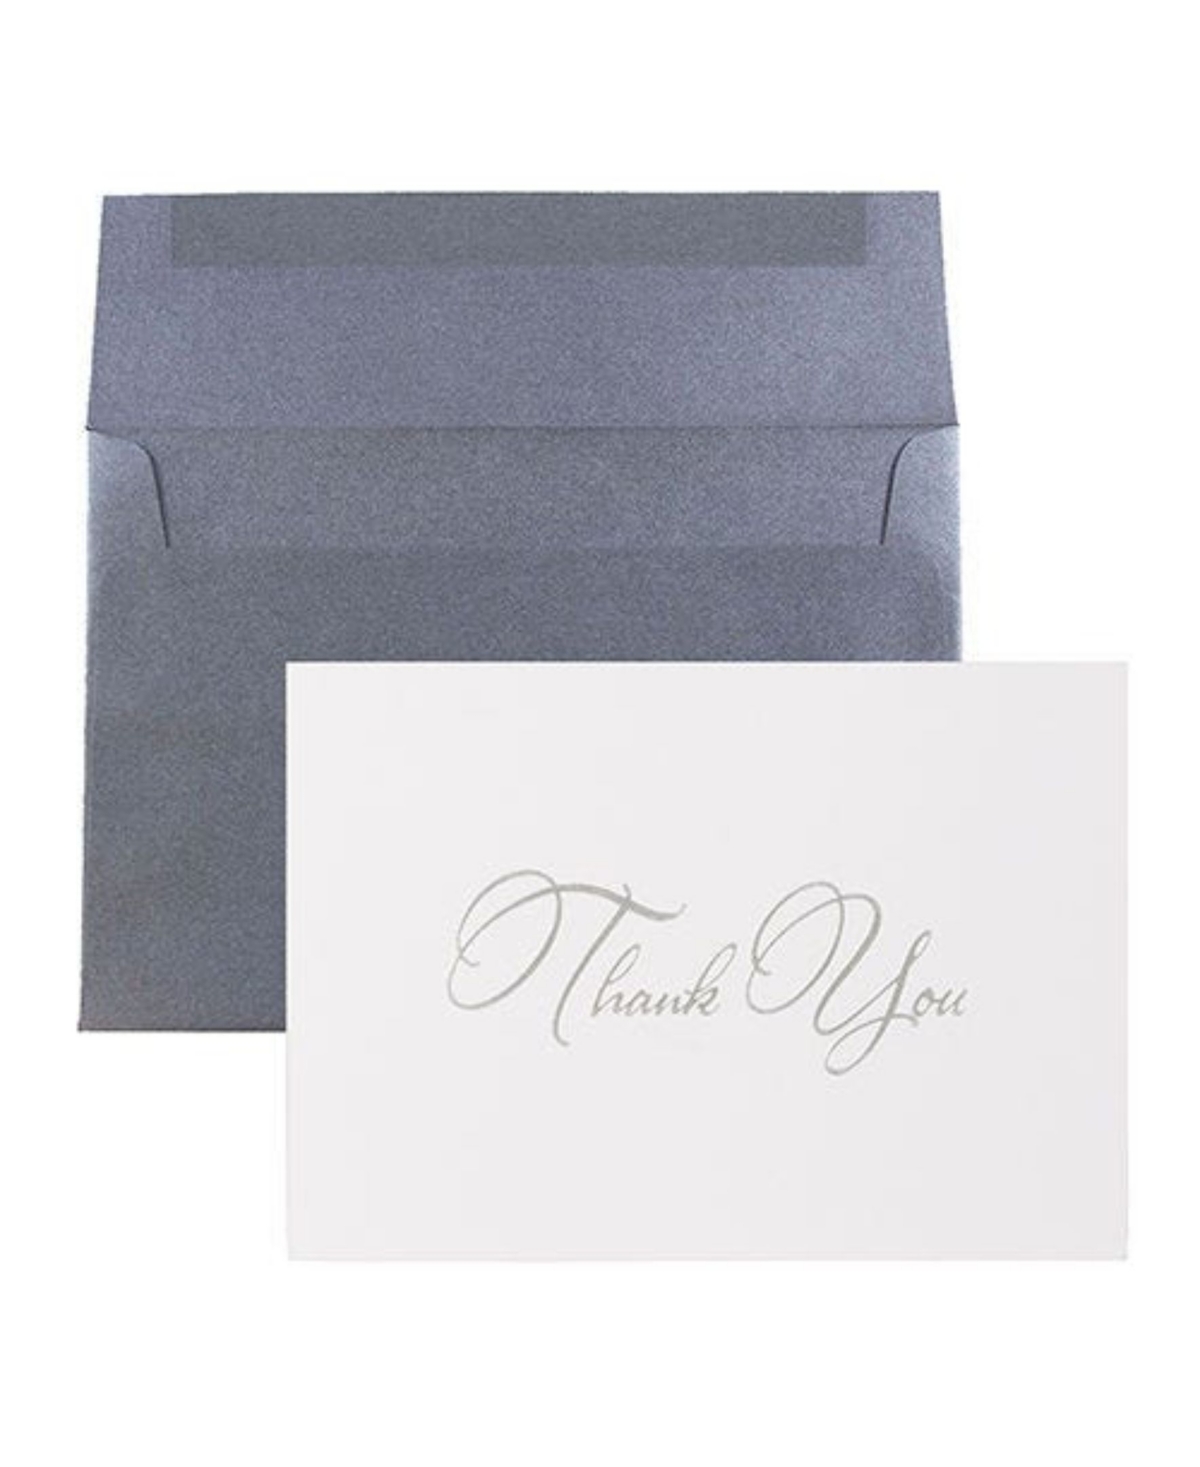 Jam Paper Thank You Card Sets - 25 Cards and Envelopes - Silver Script Cards Anthracite Envelopes